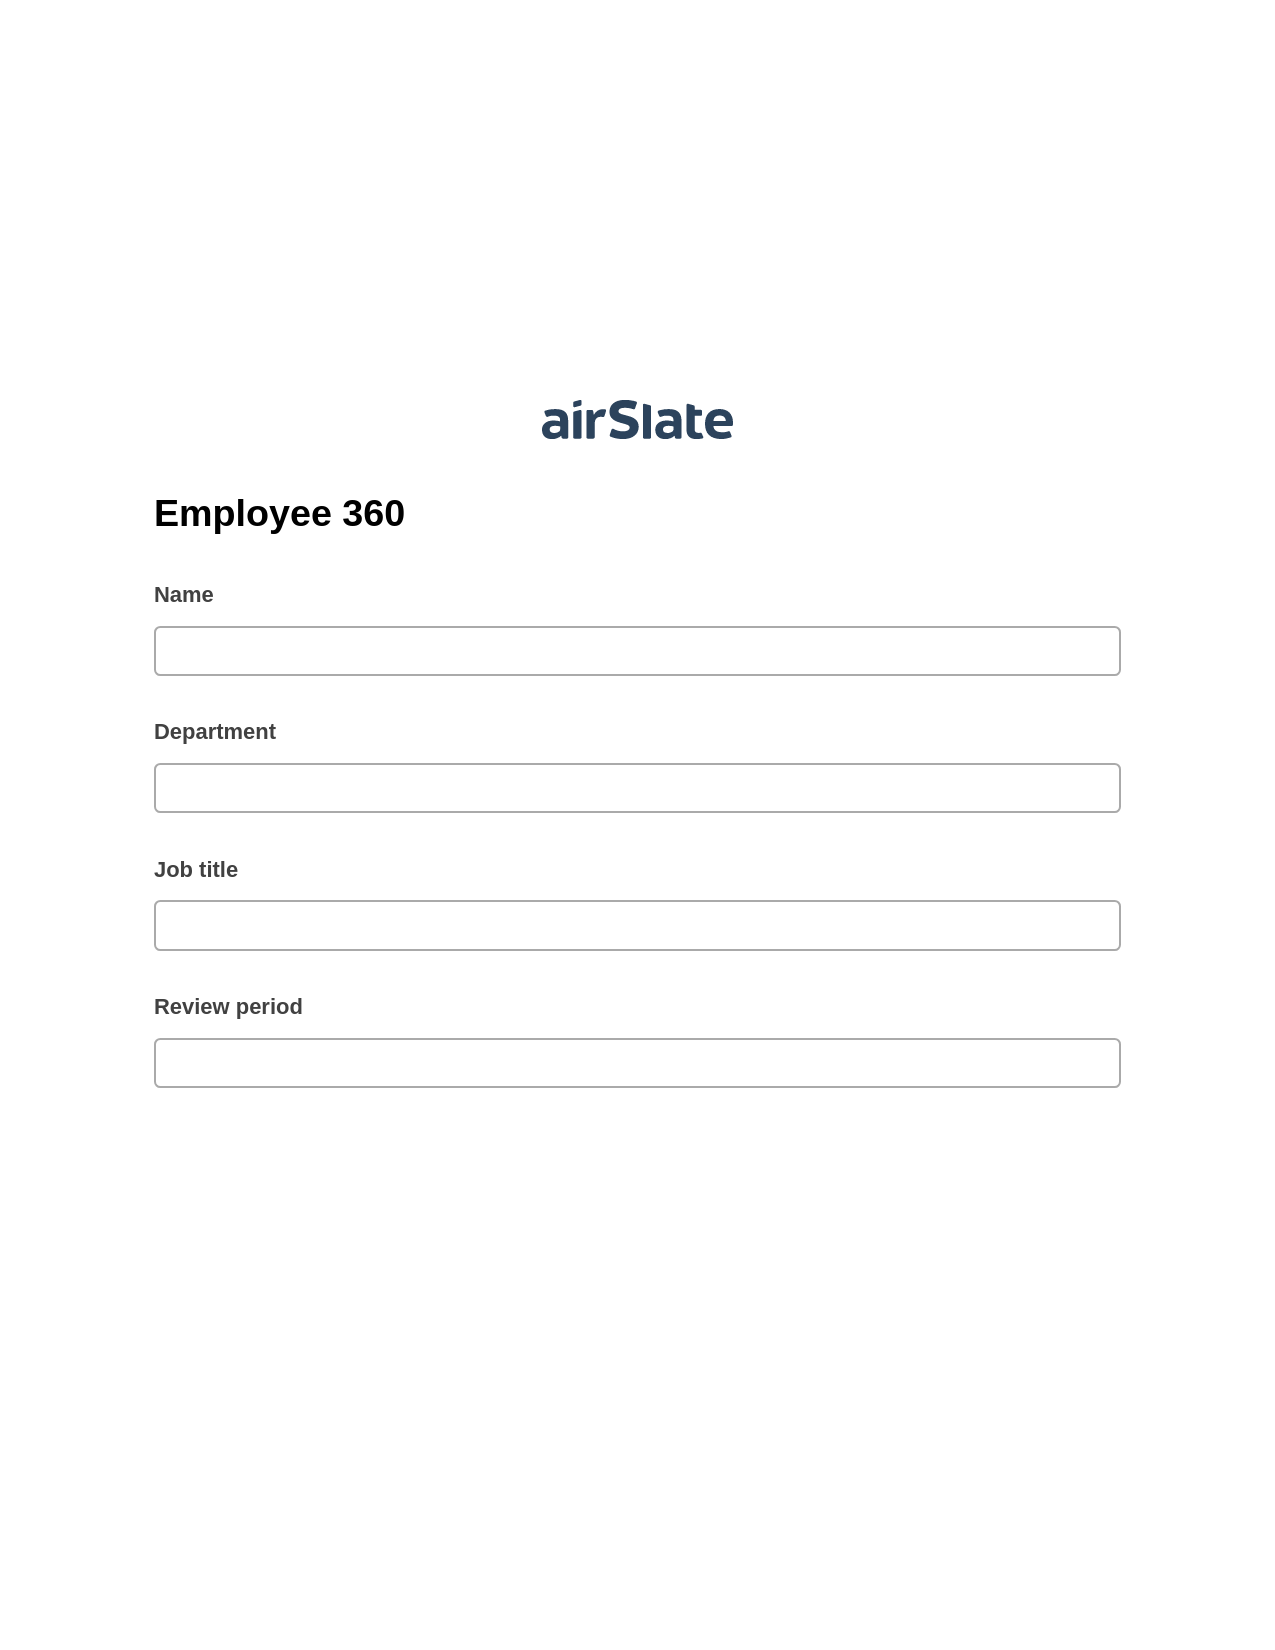 Multirole Employee 360 Pre-fill from Smartsheet Bot, Invoke Salesforce Process Bot, Archive to SharePoint Folder Bot